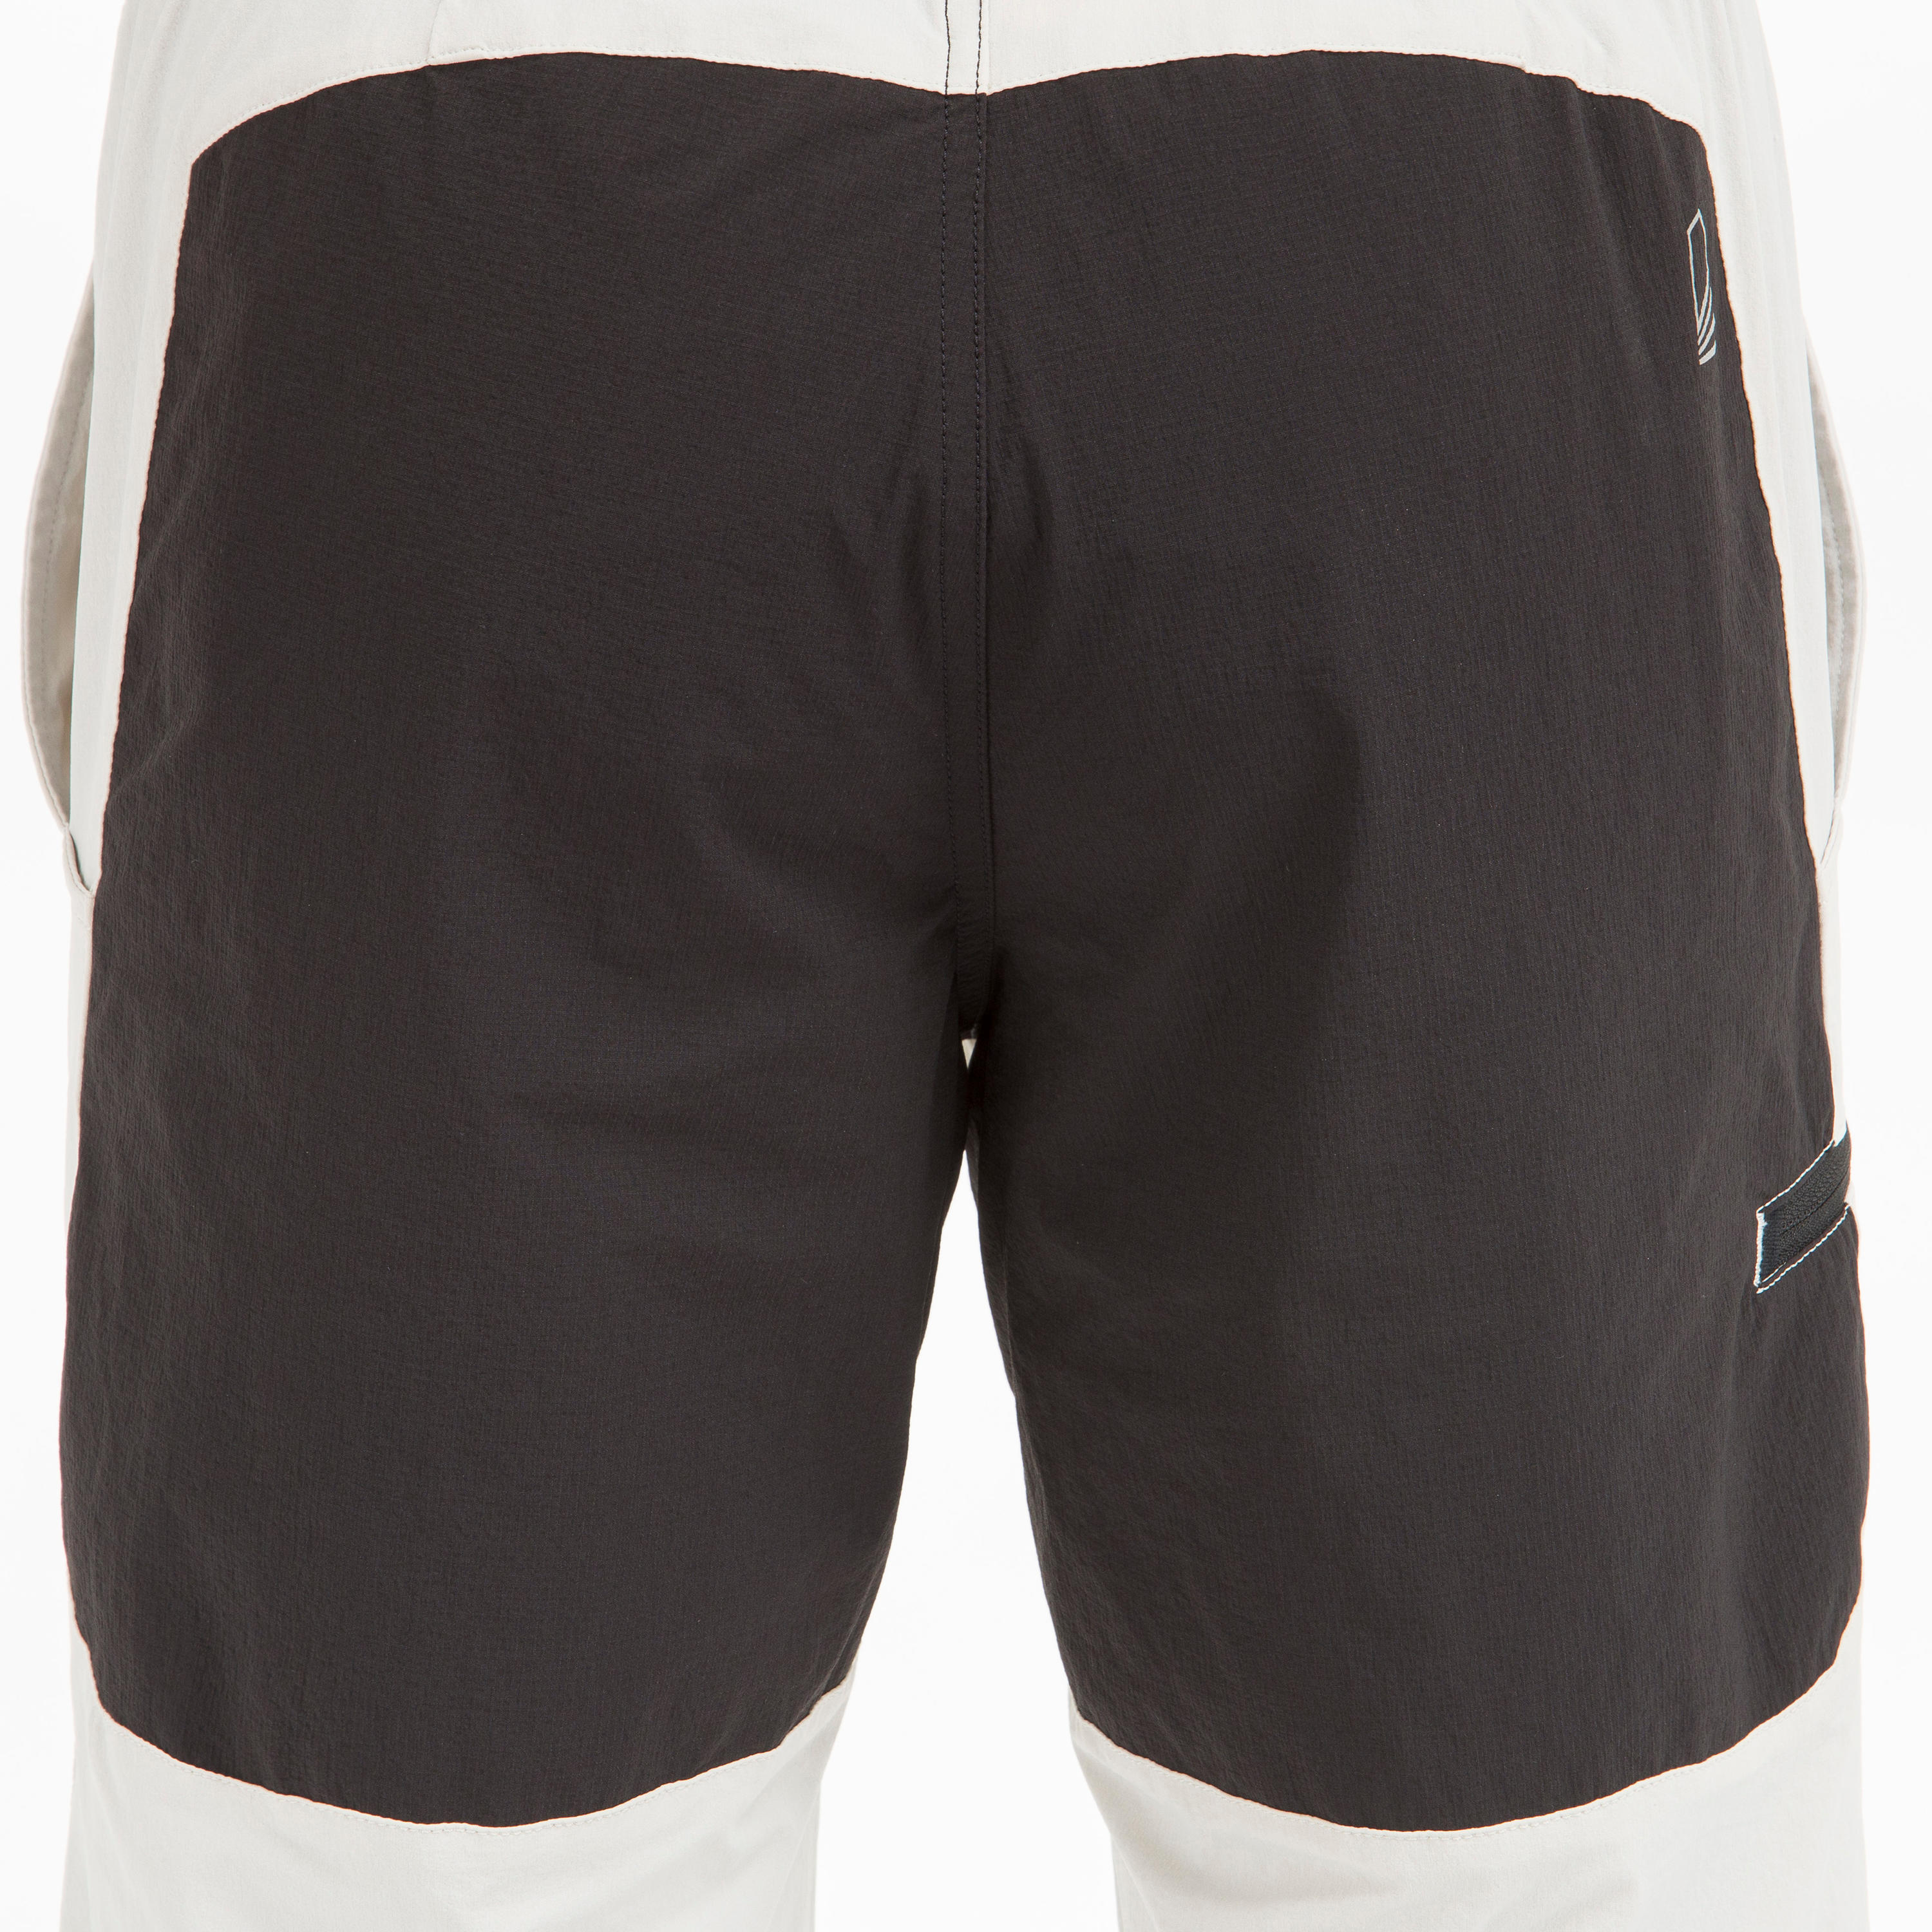 Men's Sailing 500 sailing shorts - light grey 7/12